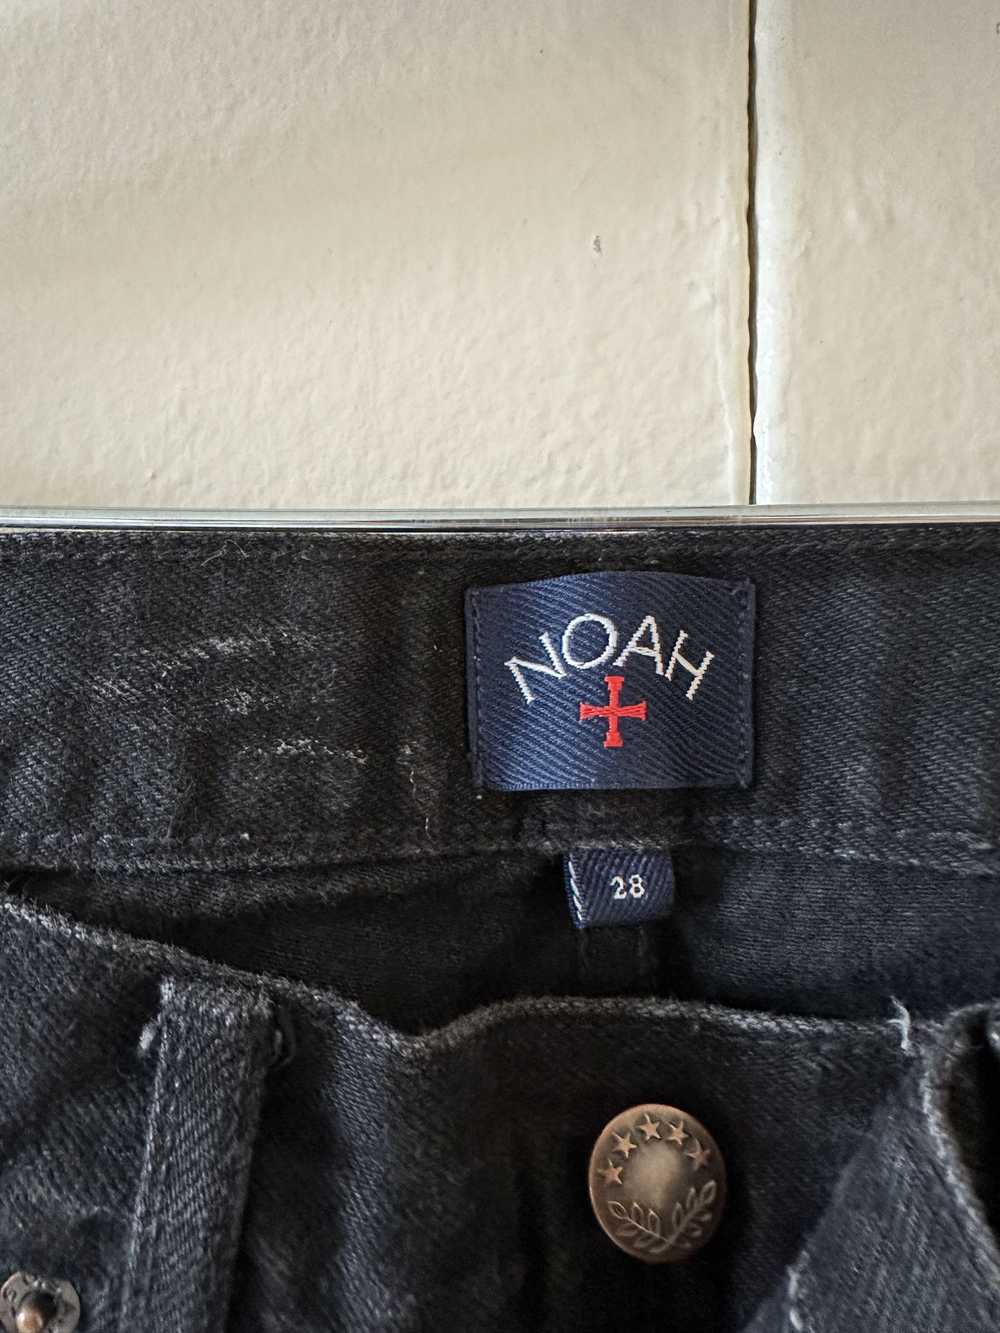 Noah Noah Denim Jeans - image 3